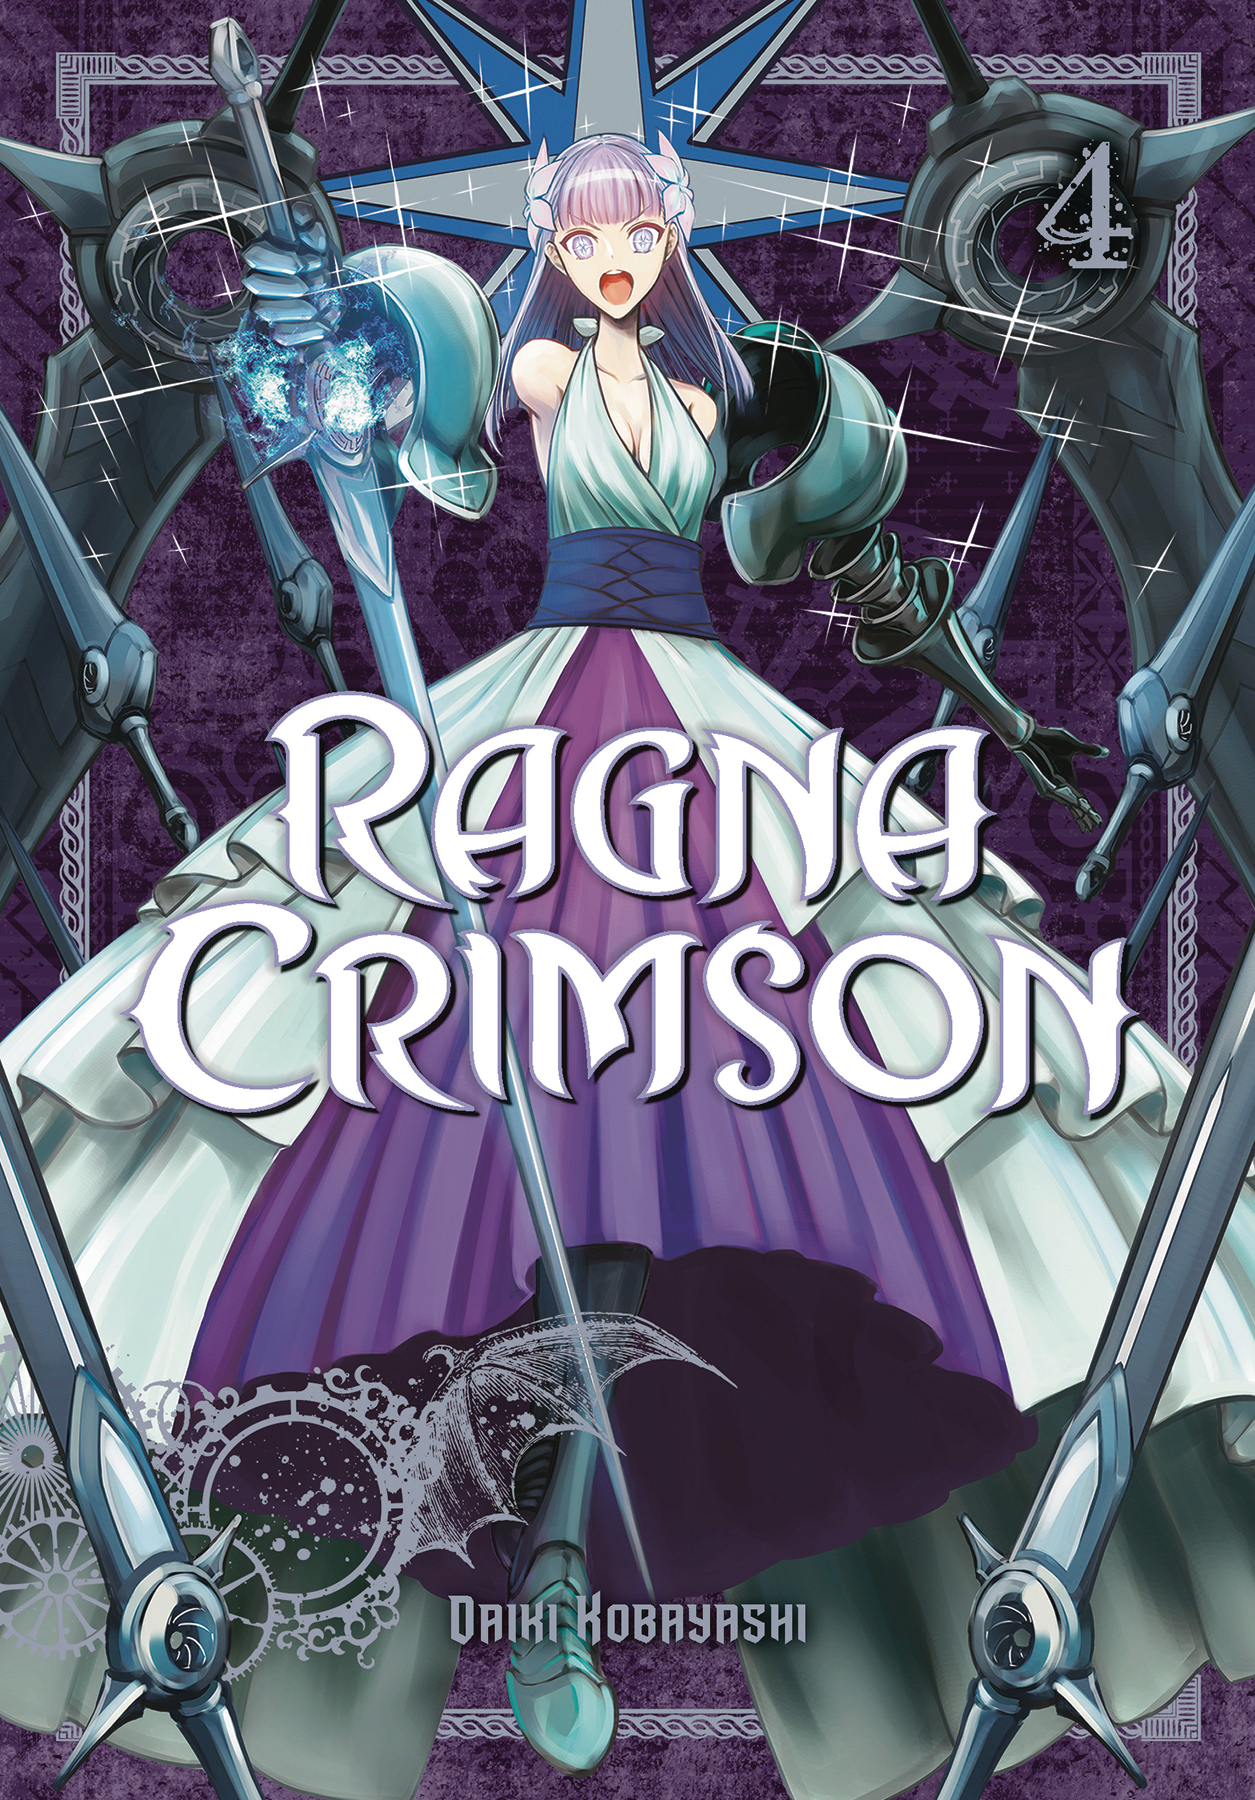 Ragna Crimson Manga Volume 4